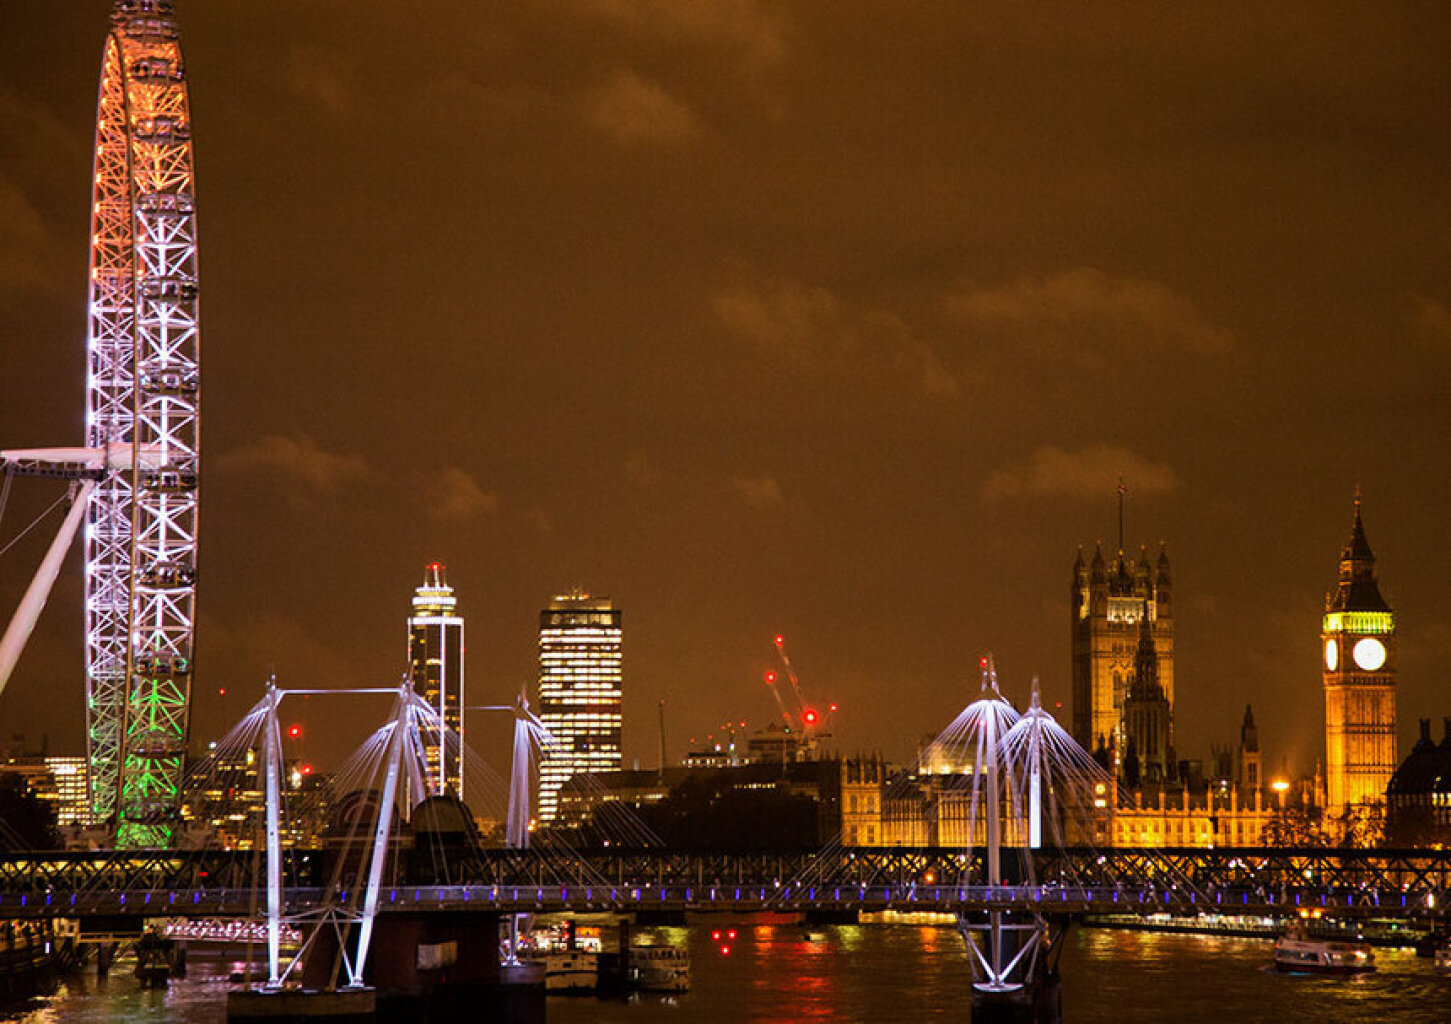 Quadro Night London por Felipe Hoffmann -  CATEGORIAS